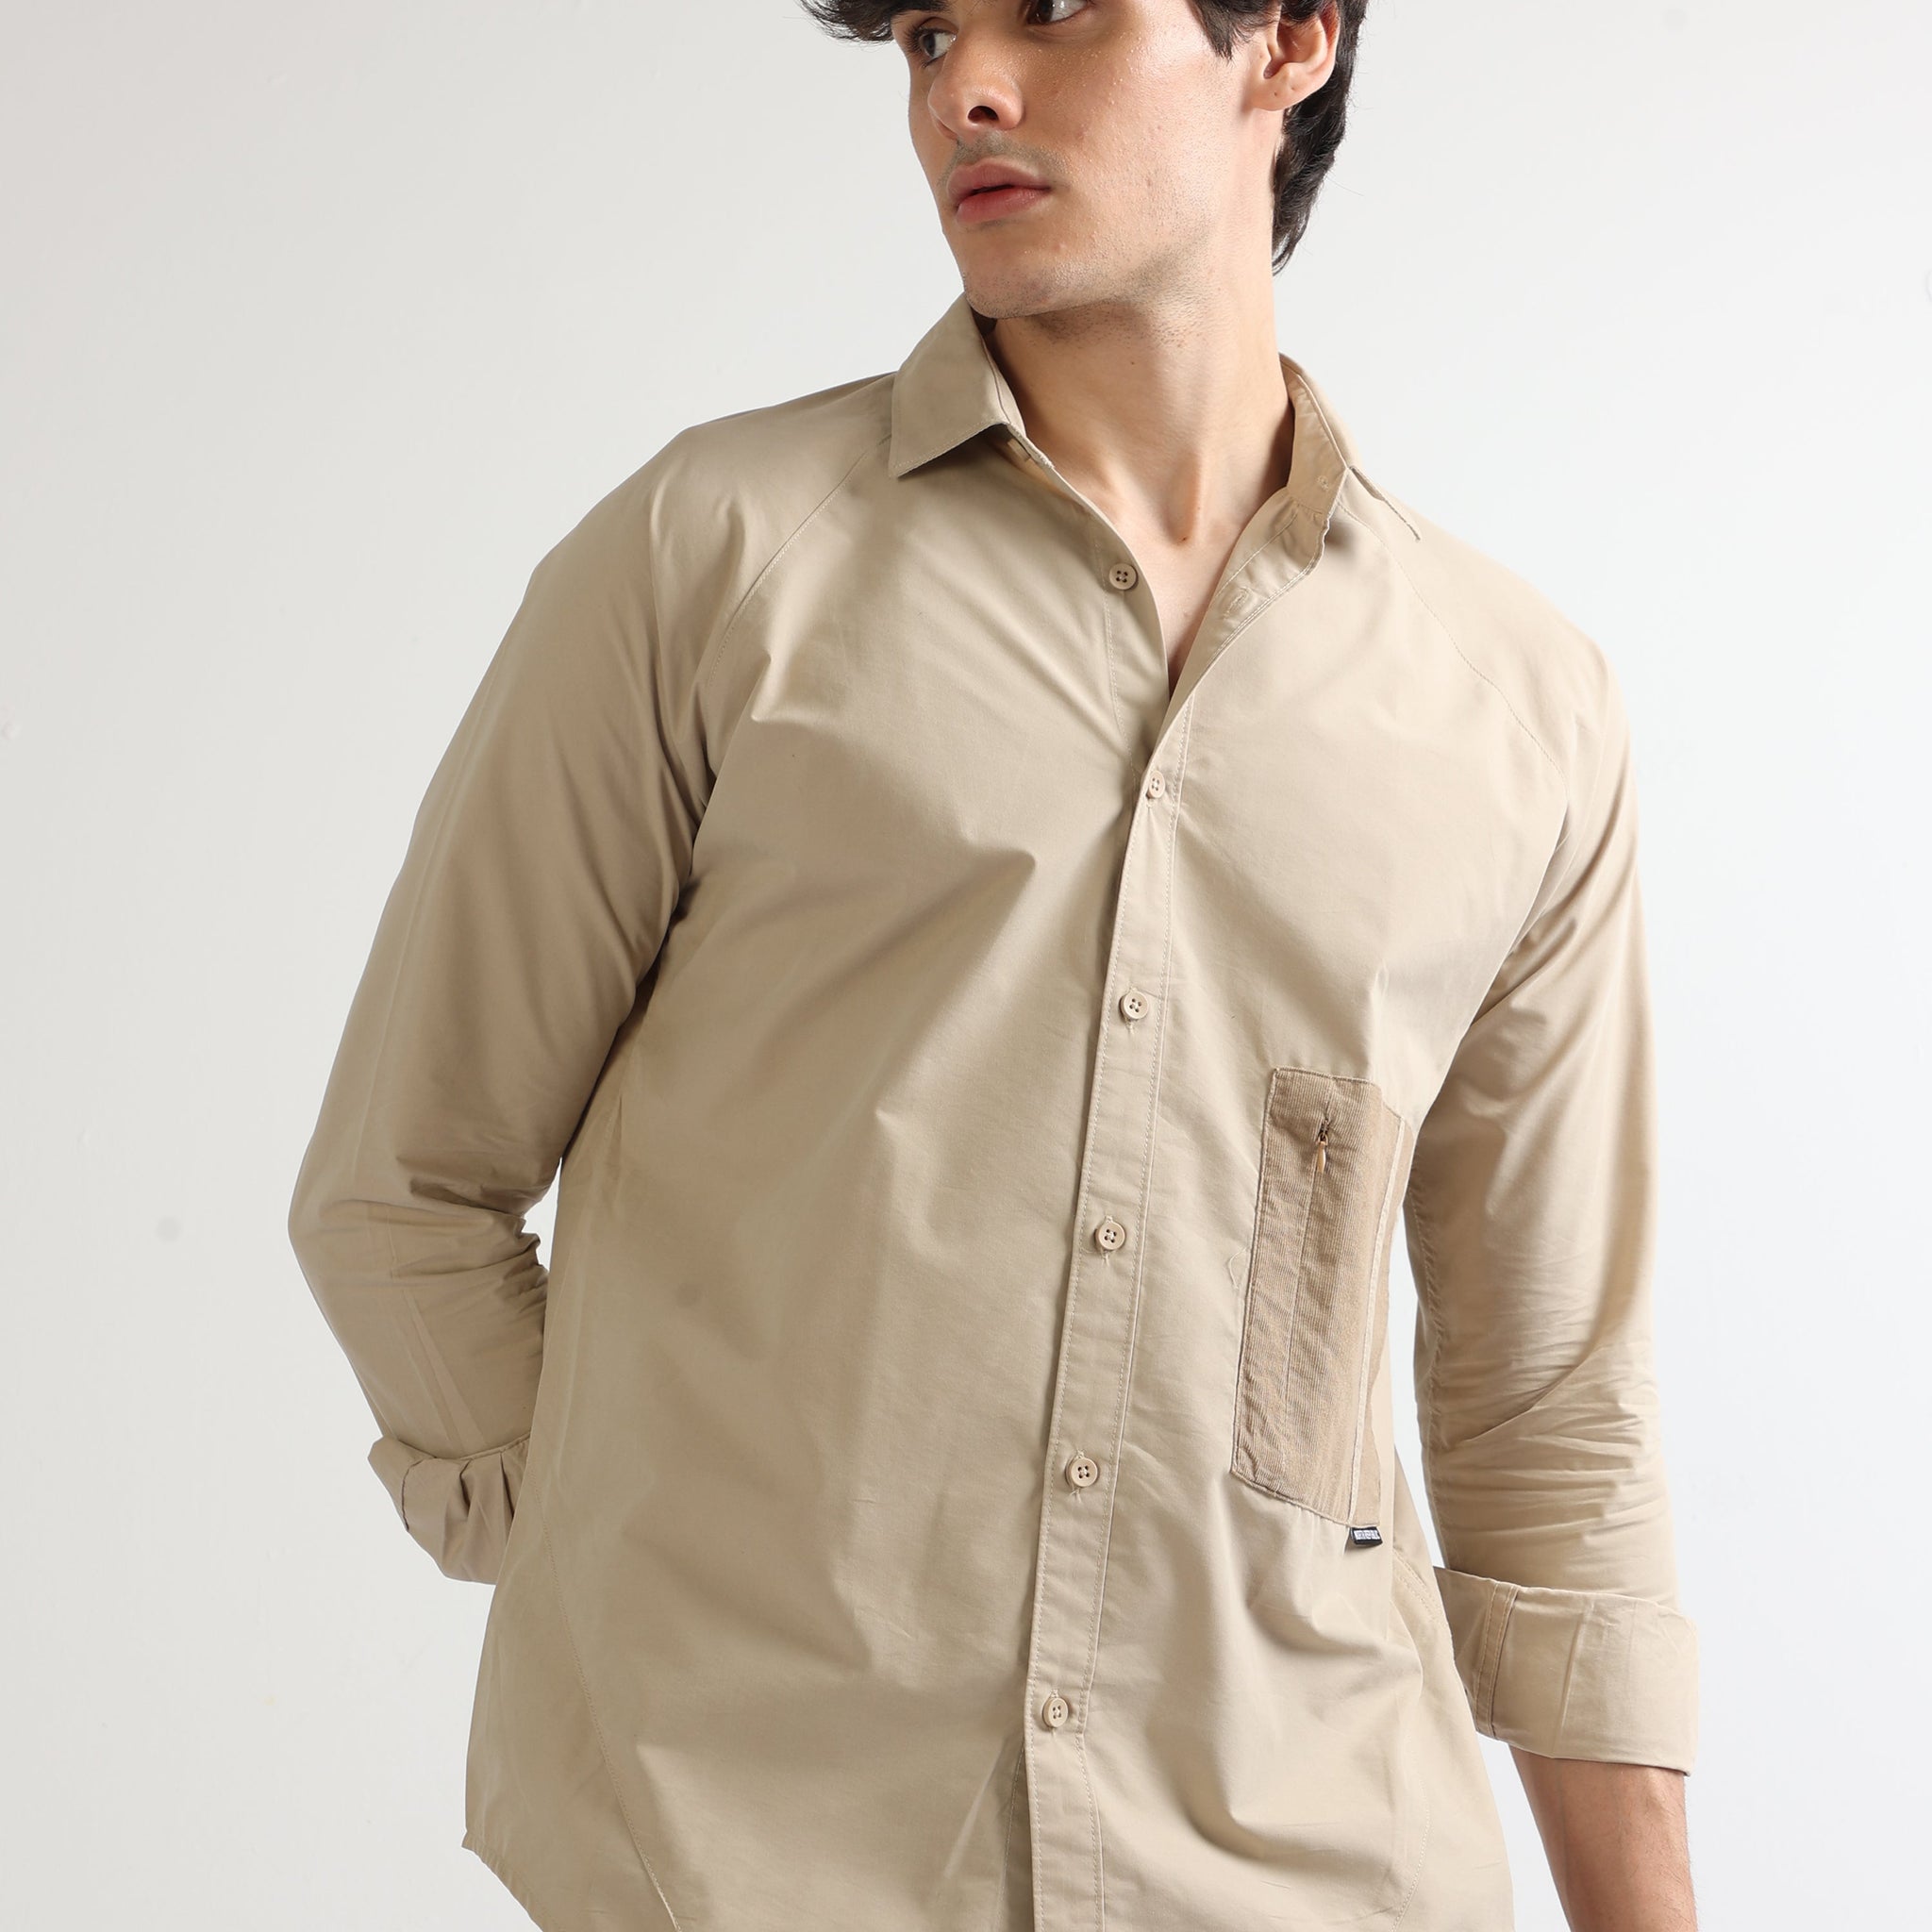 Beige Men's Raglan Full Sleeves Shirt With Stylish Pocket